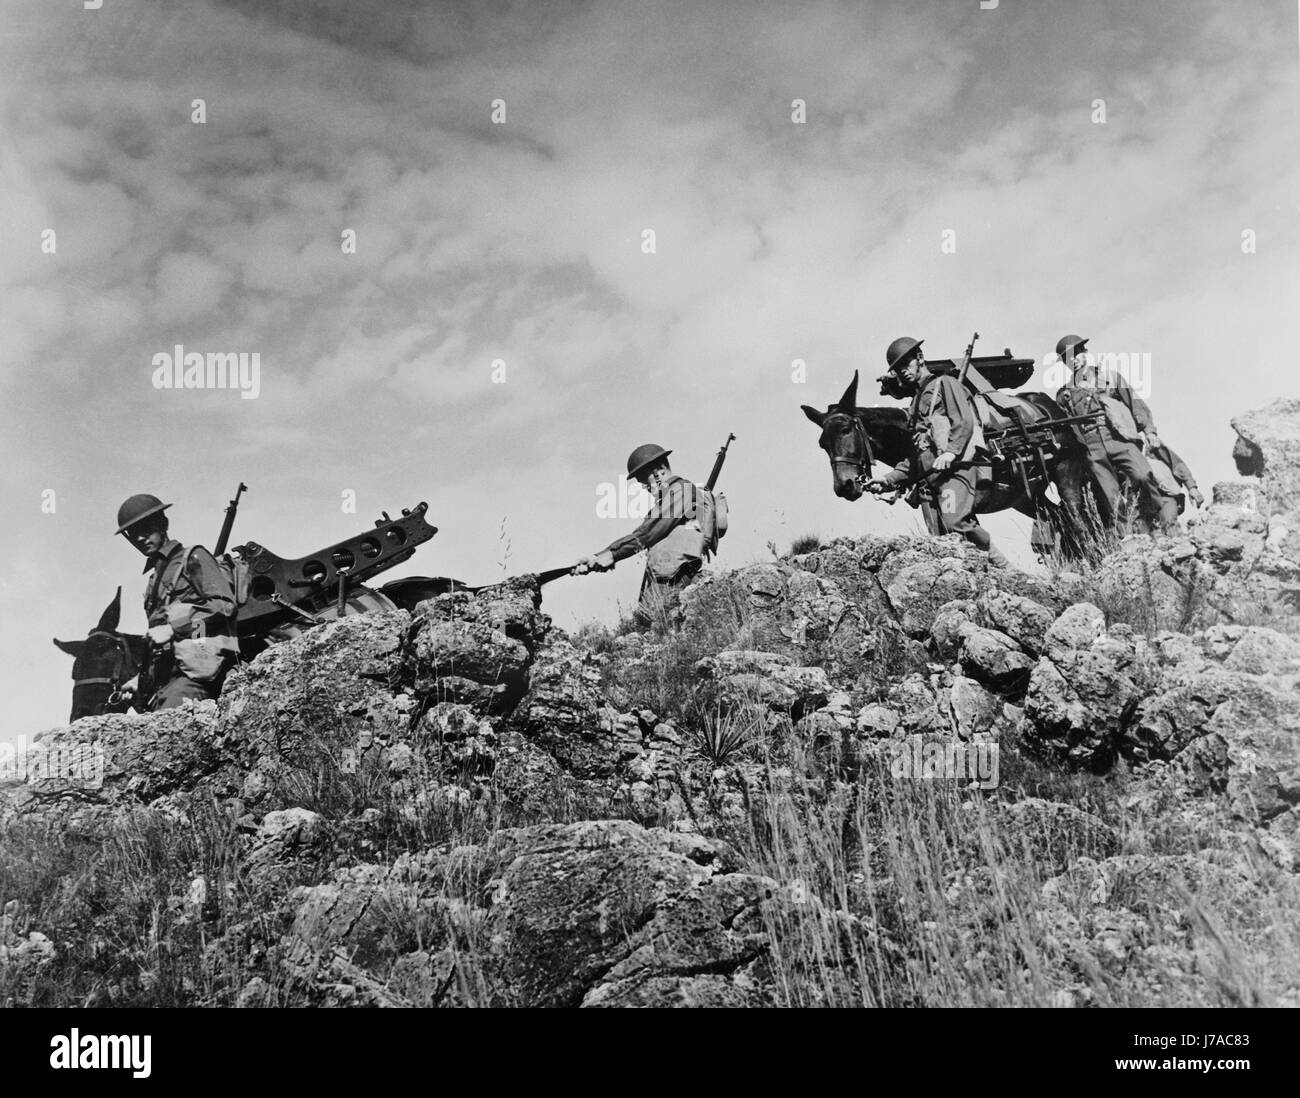 Artillerymen use Army mules to carry their equipment through rough terrain, circa 1942. Stock Photo